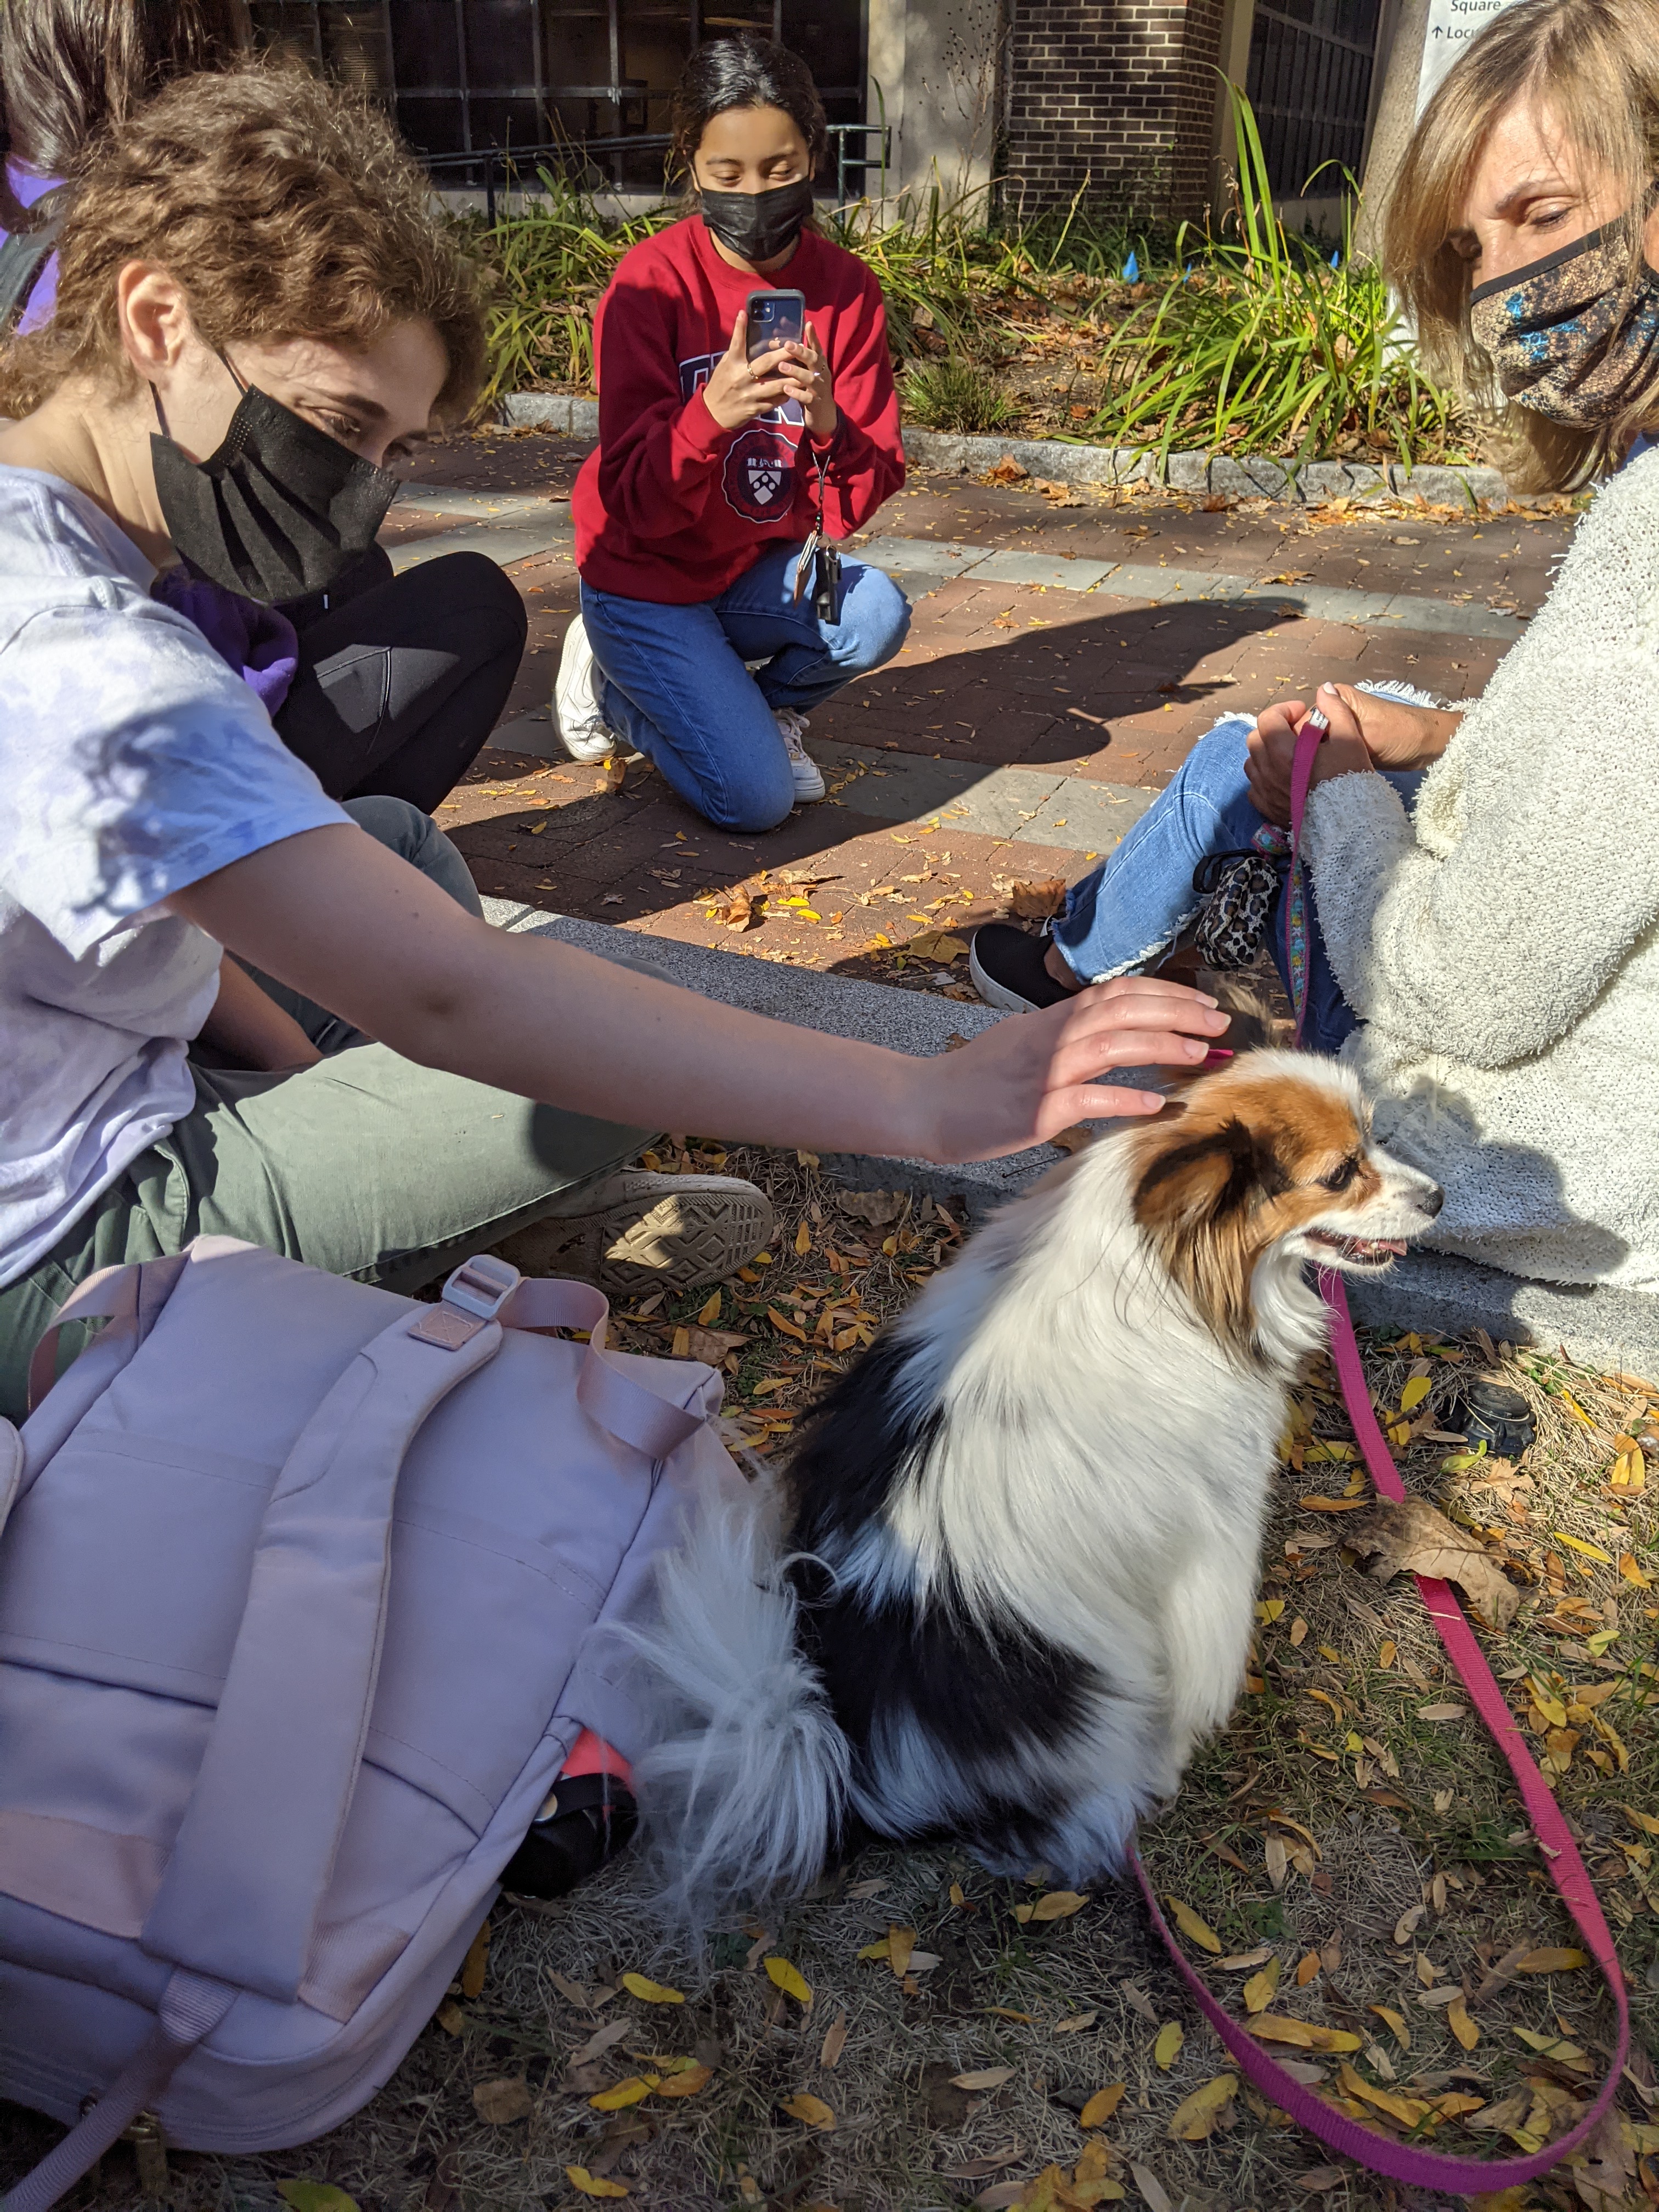 Penn students petting a dog outside